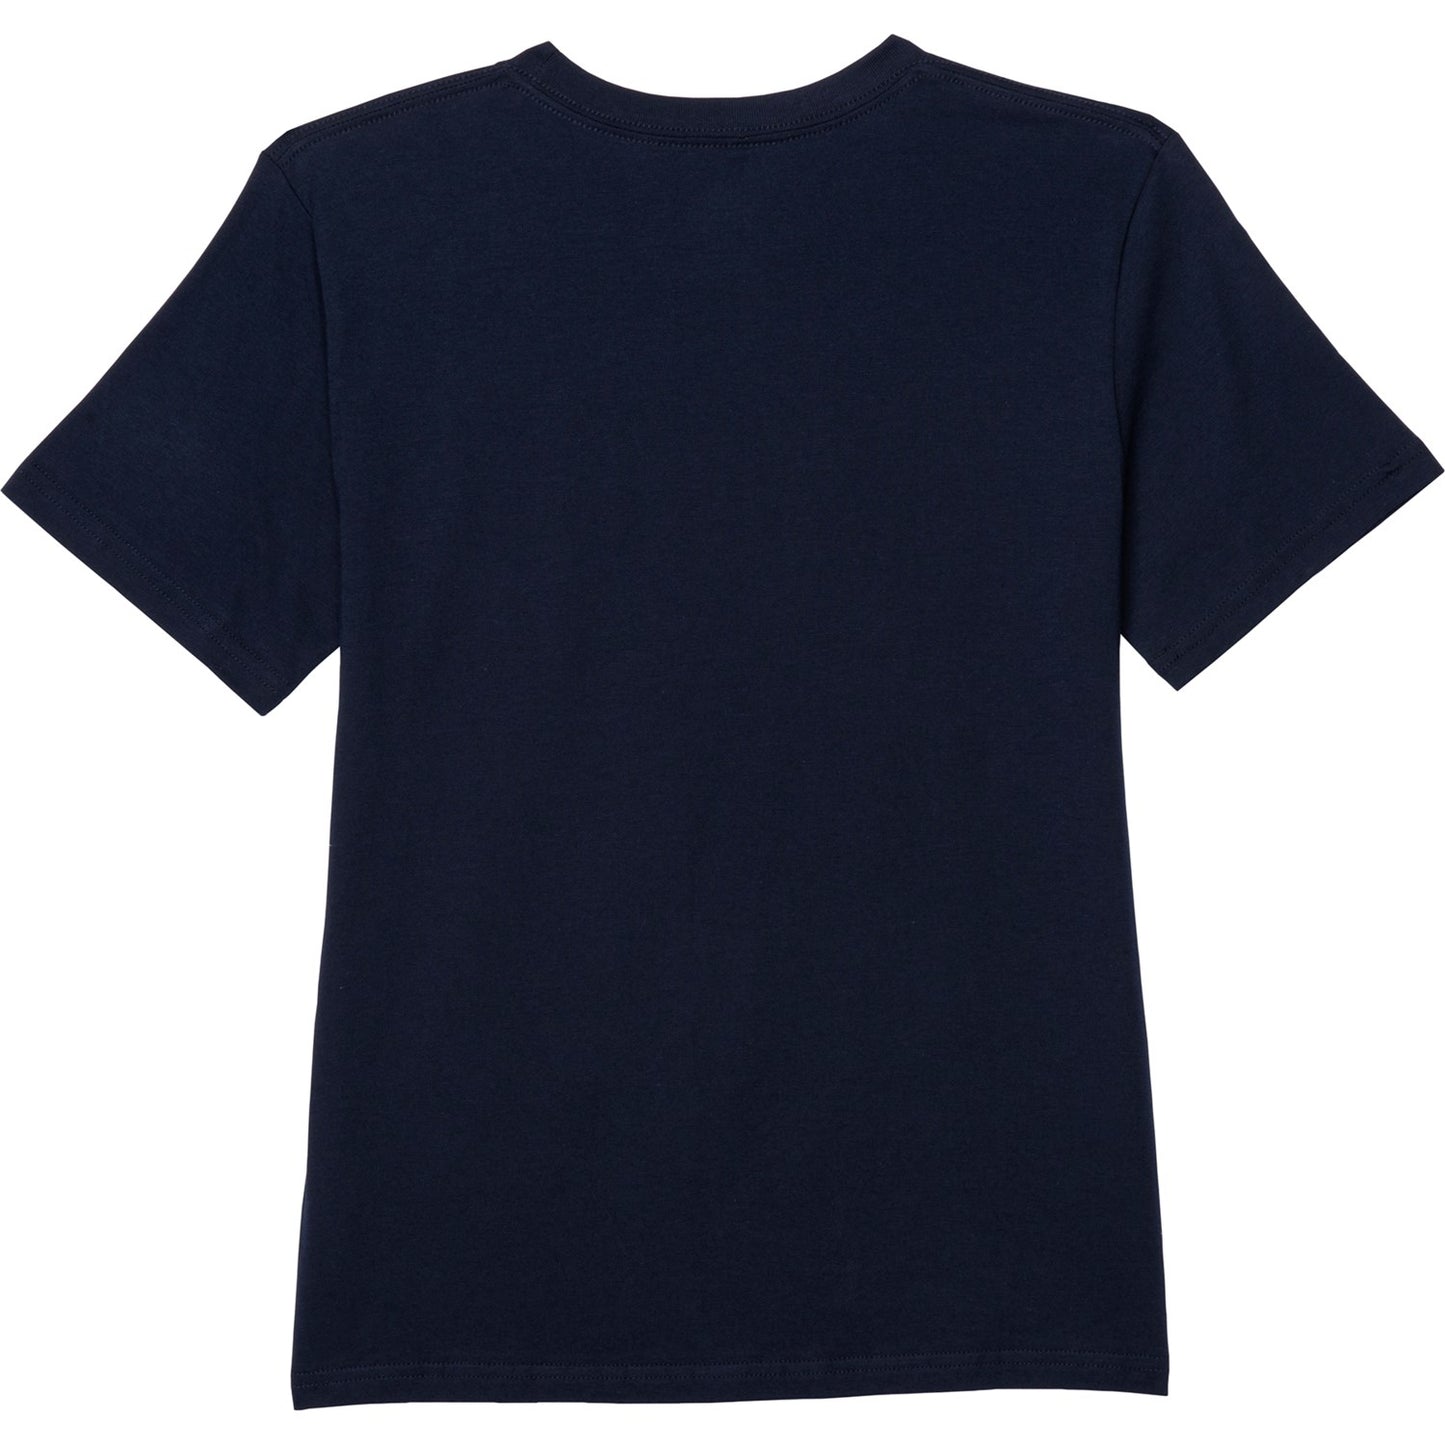 Adidas Big Boys Badge of Sport Short Sleeve Cotton T-Shirt